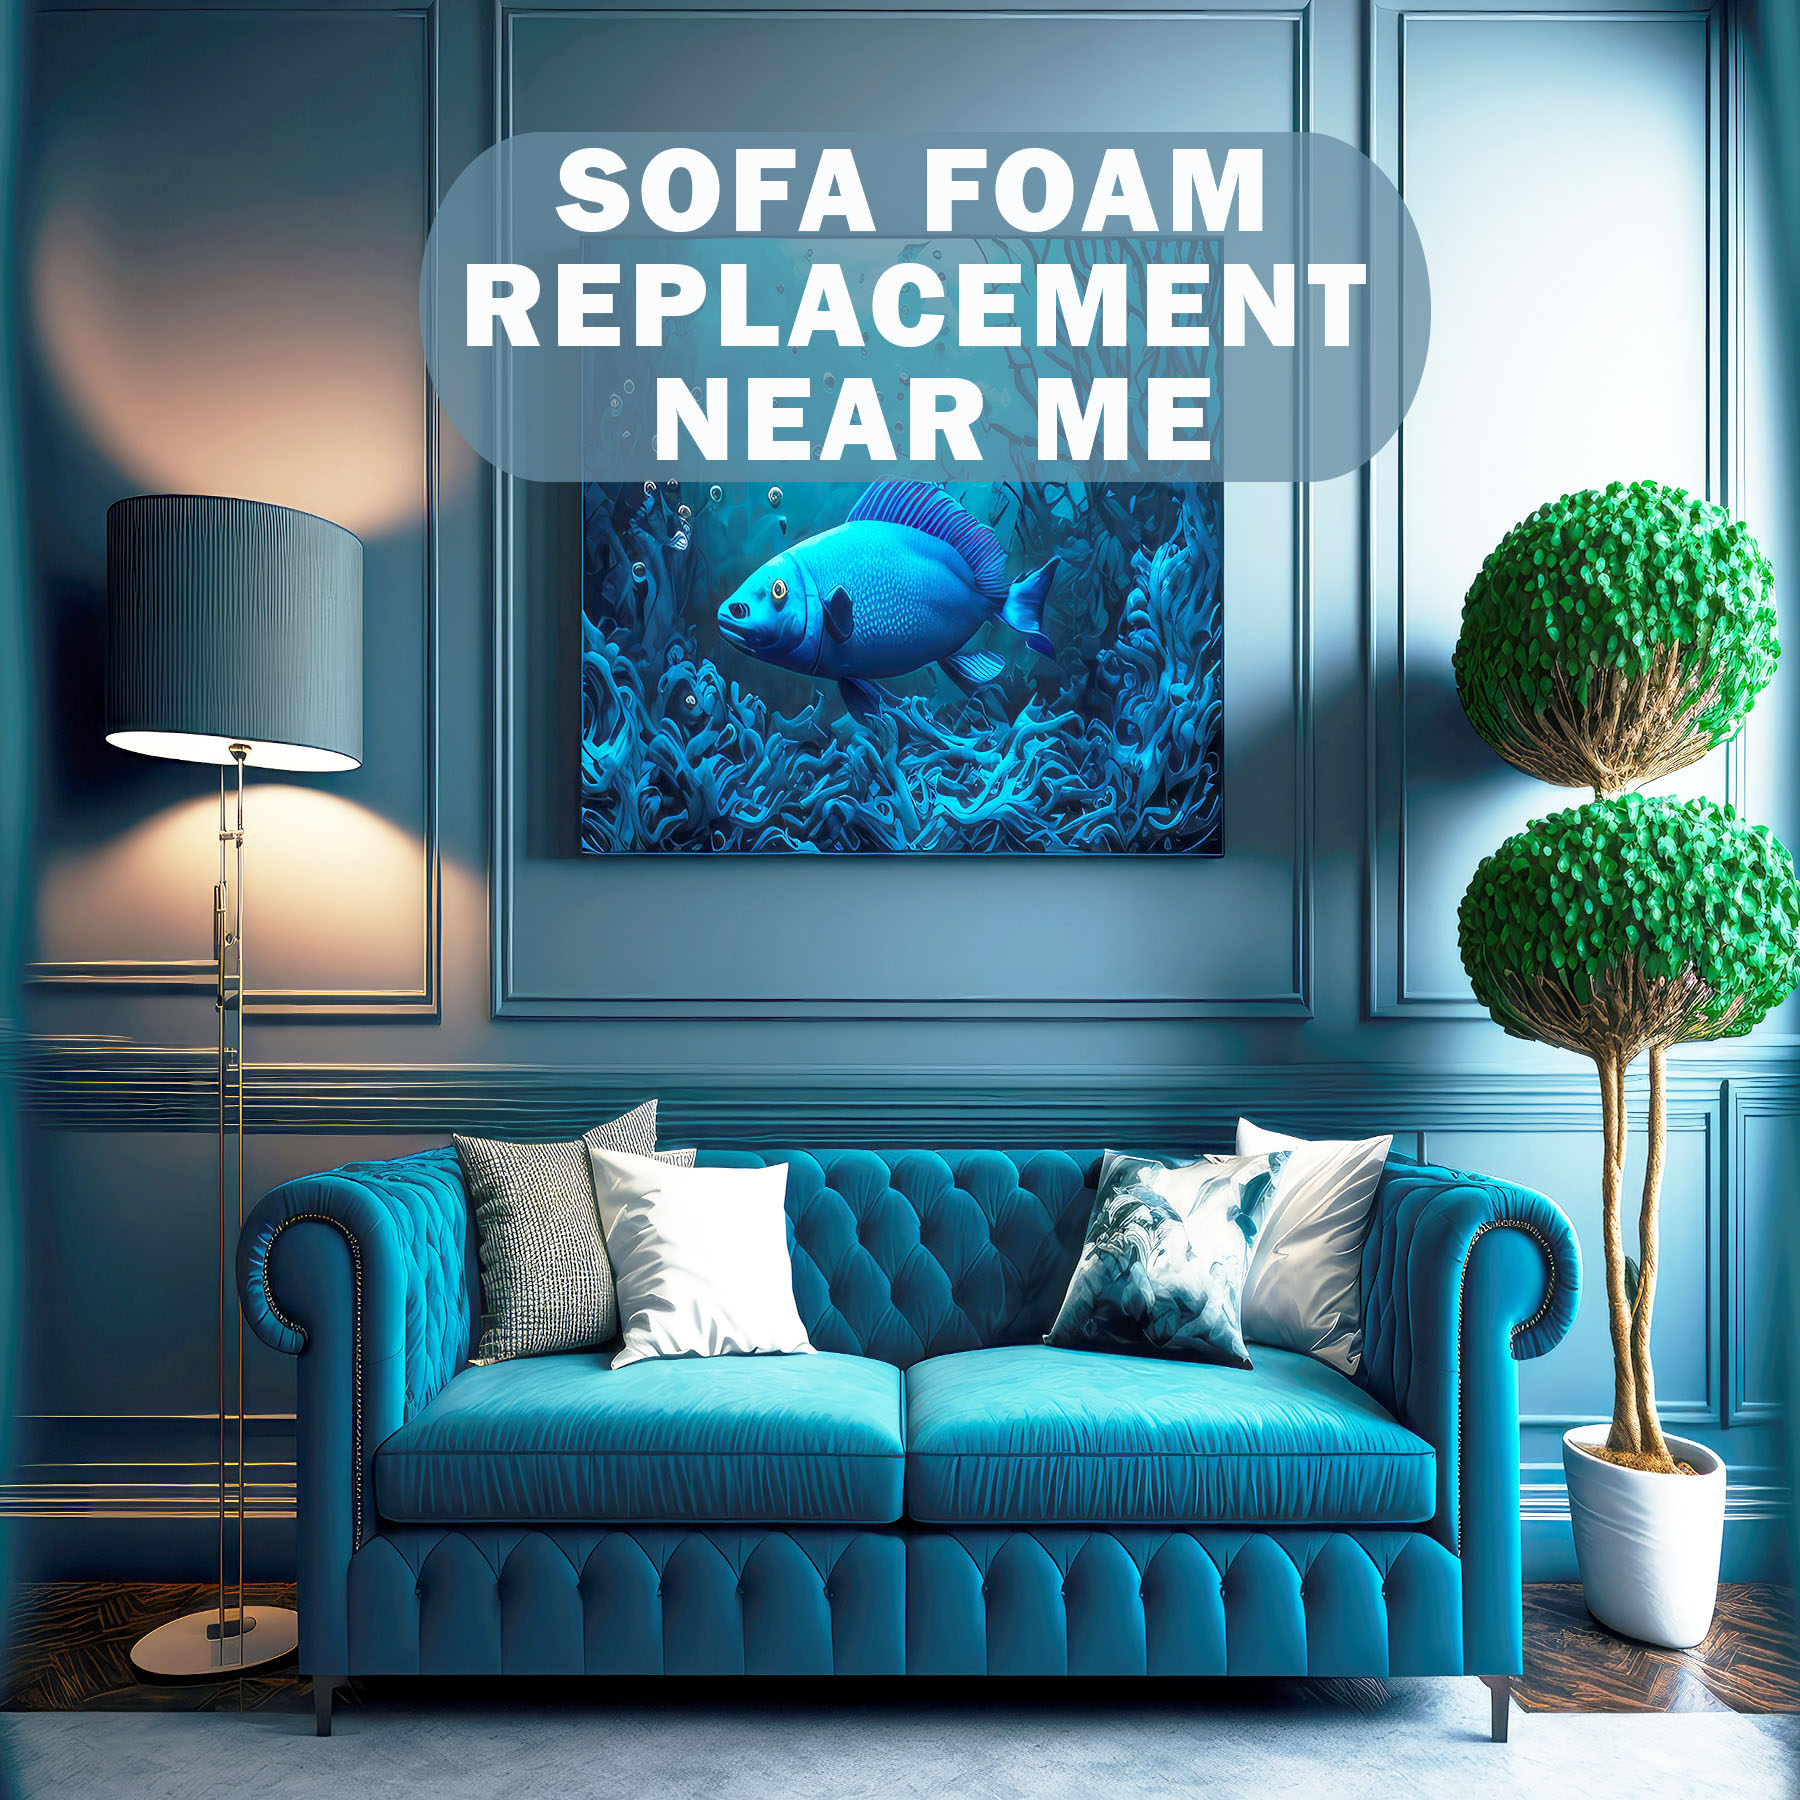 Sofa Foam Replacement near Me